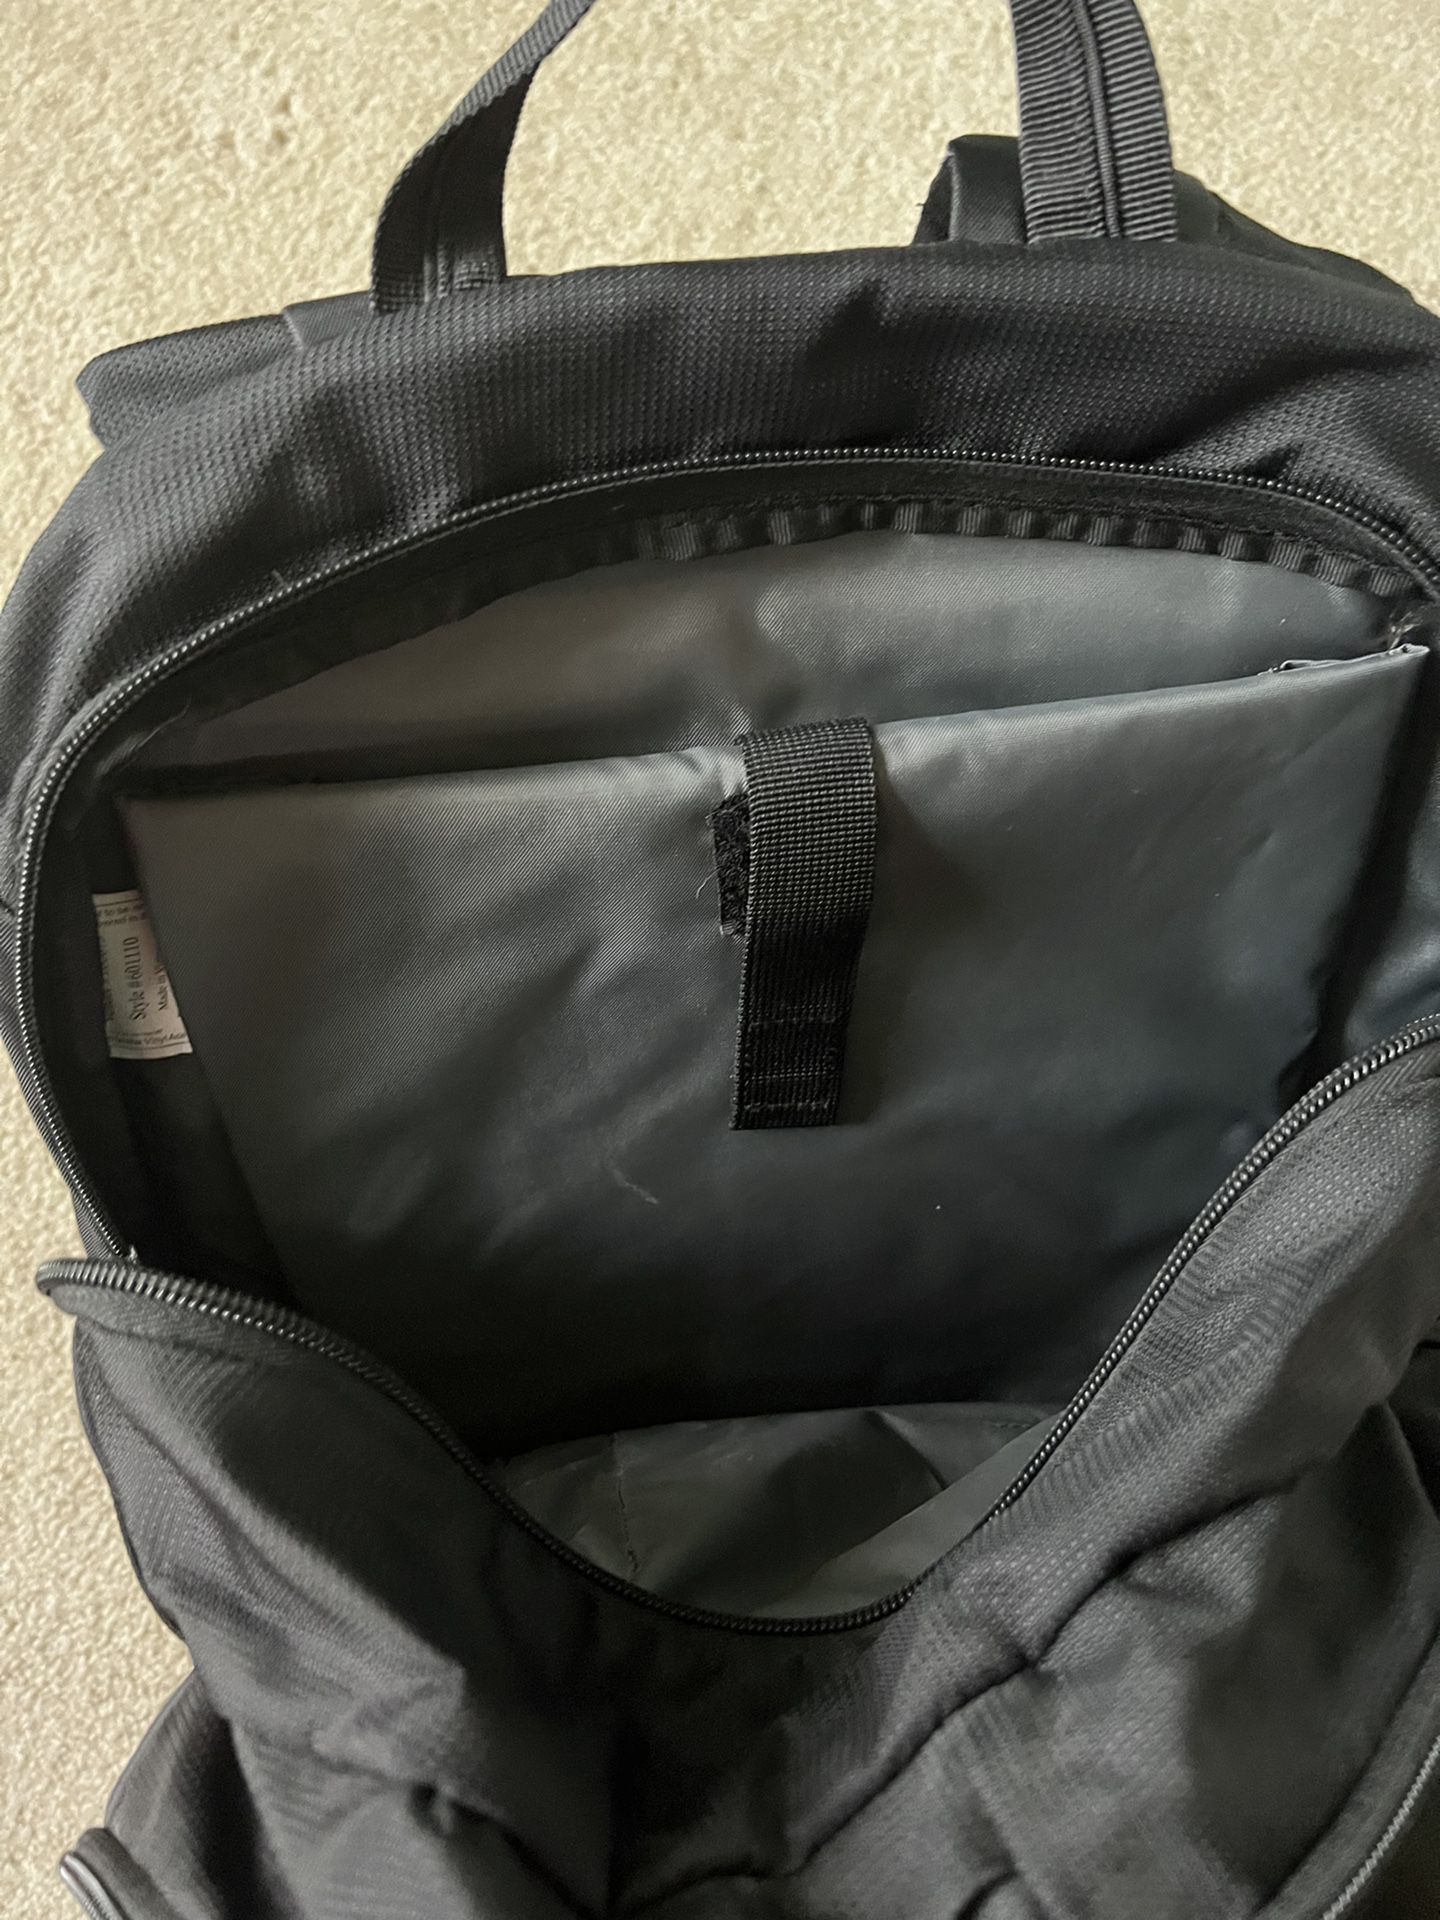 Victorinox Laptop Backpack